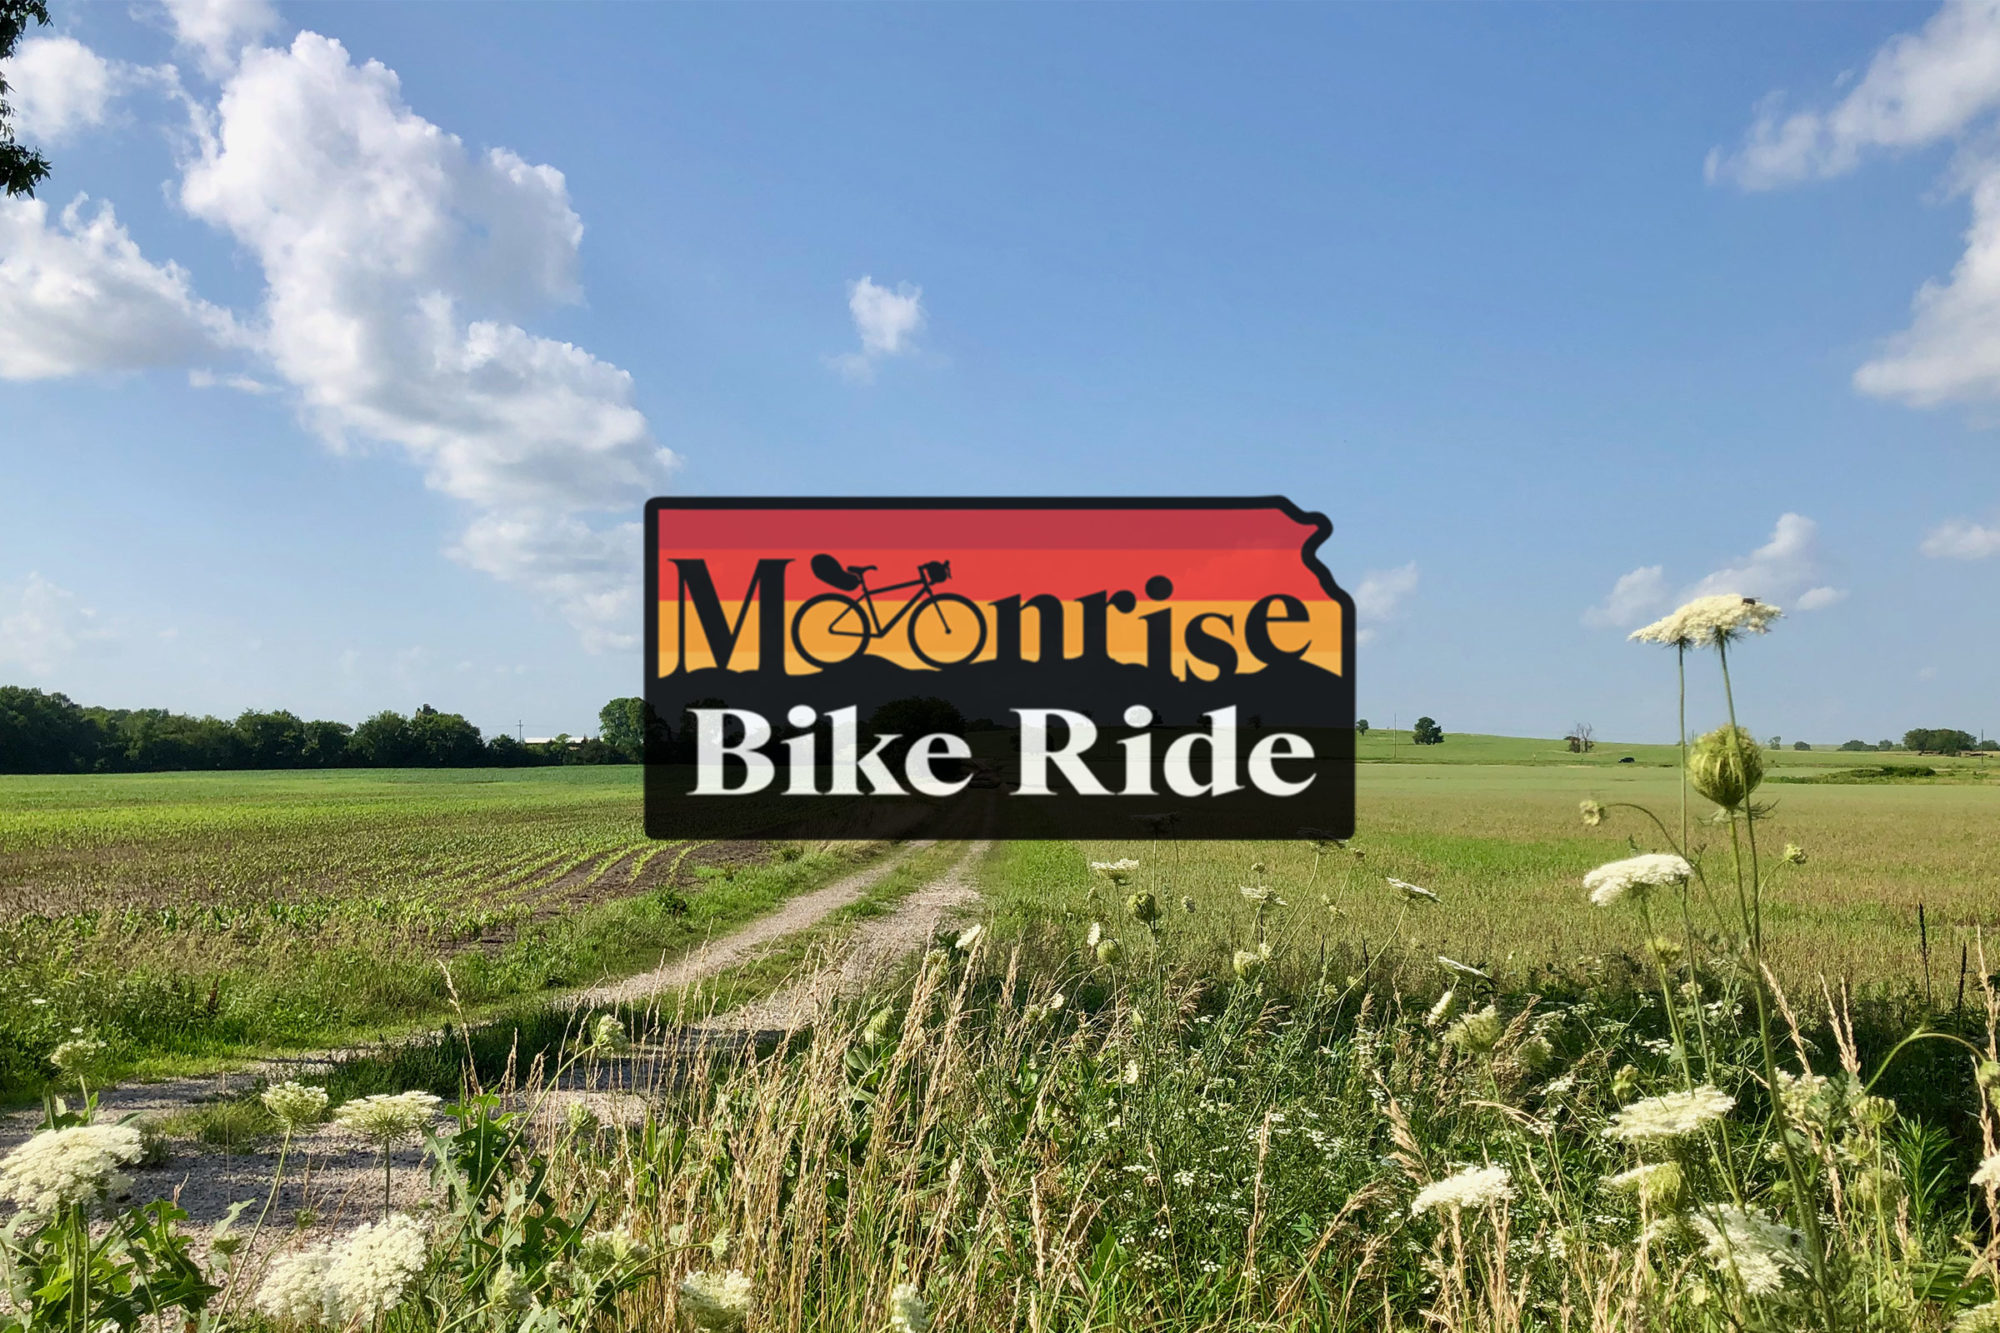 Moonrise Bike Ride